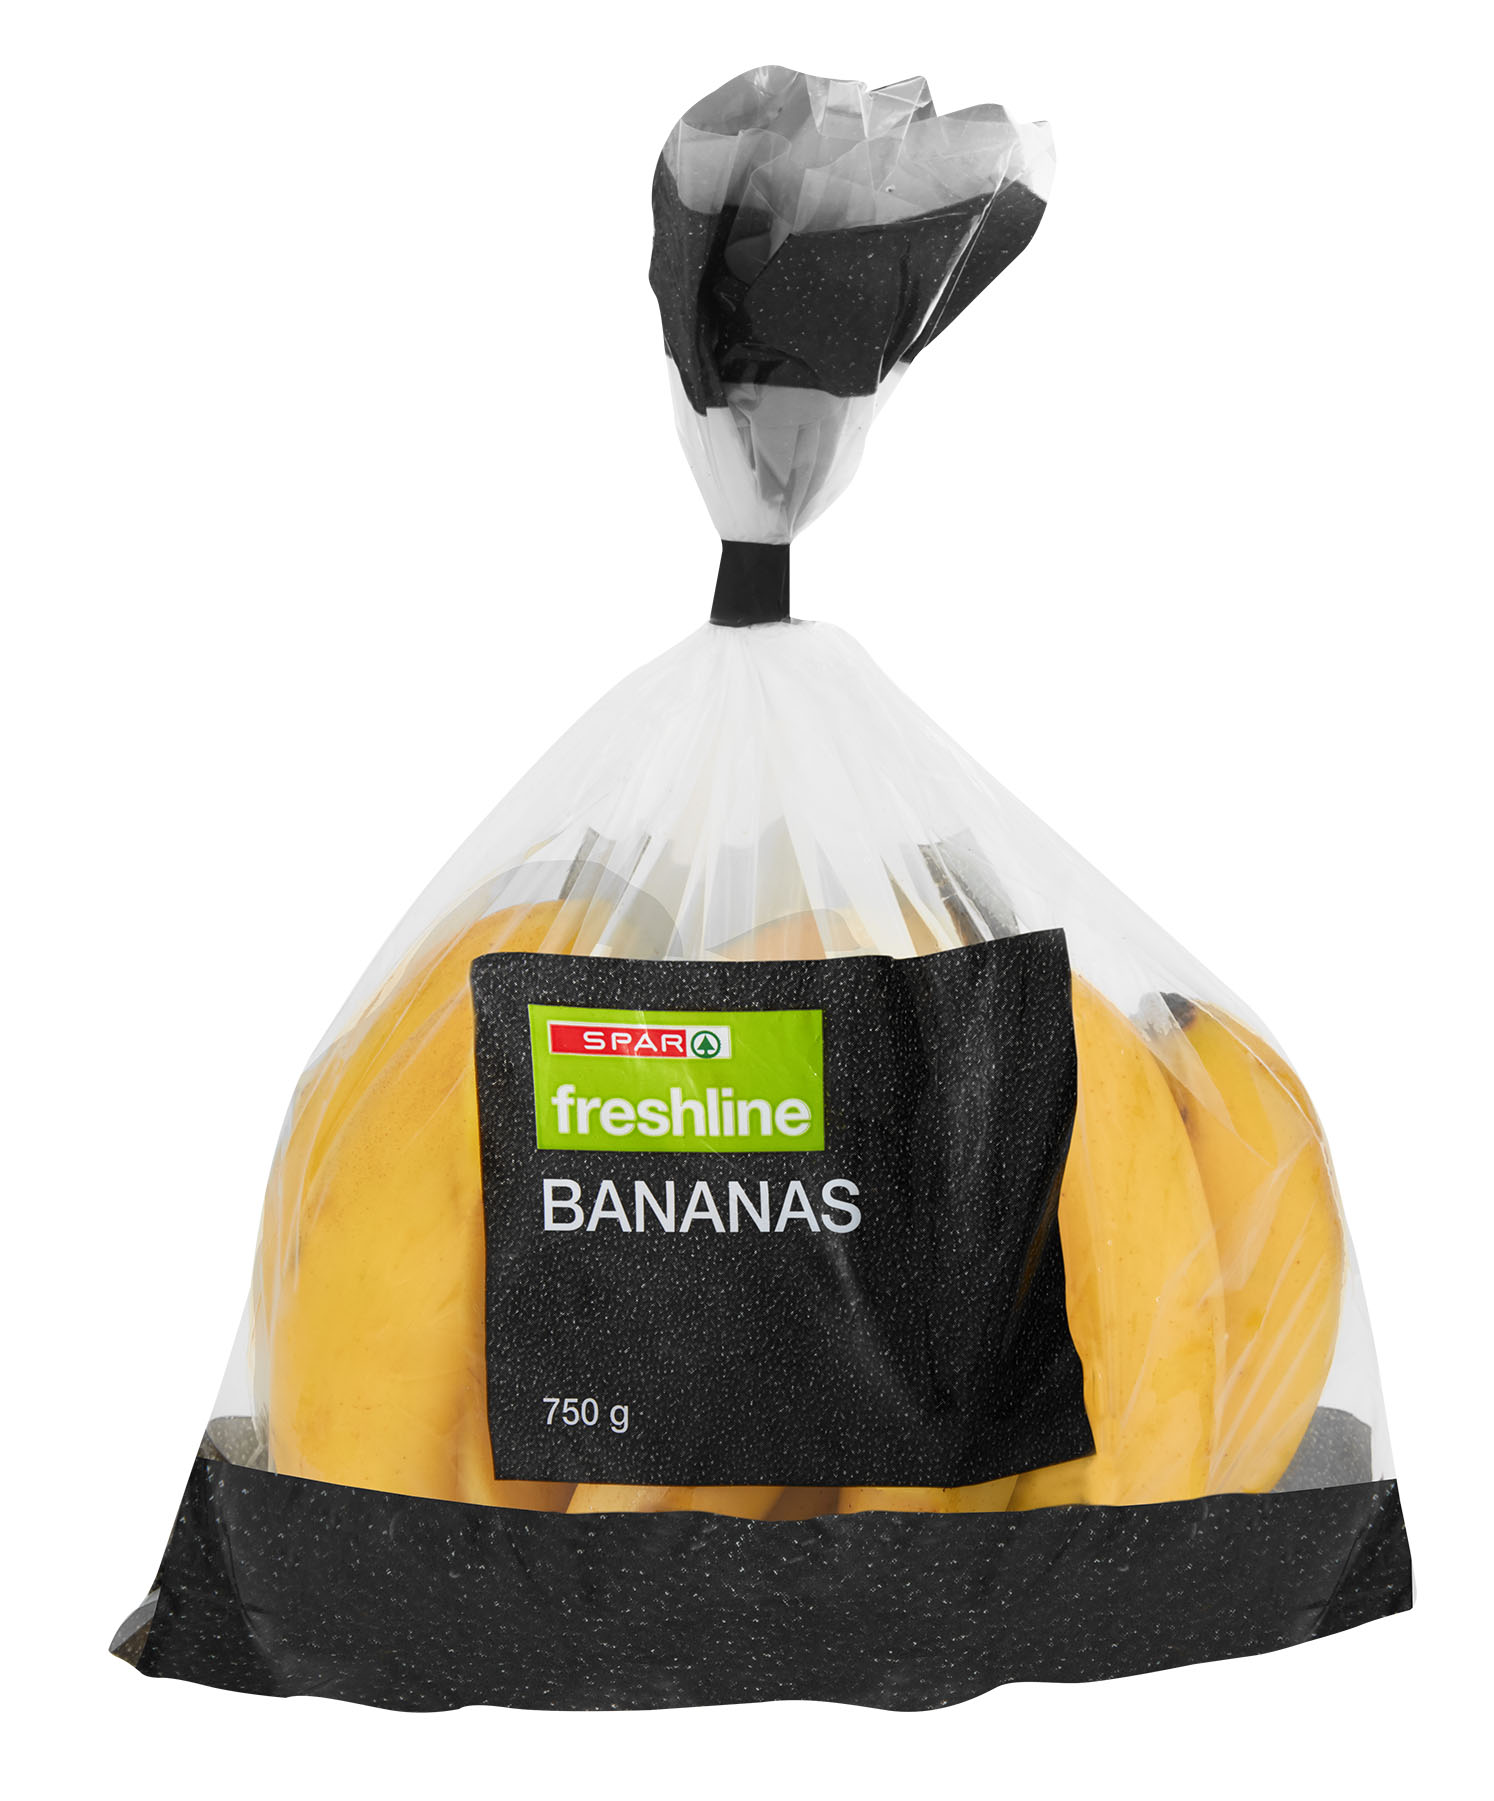 freshline bananas  